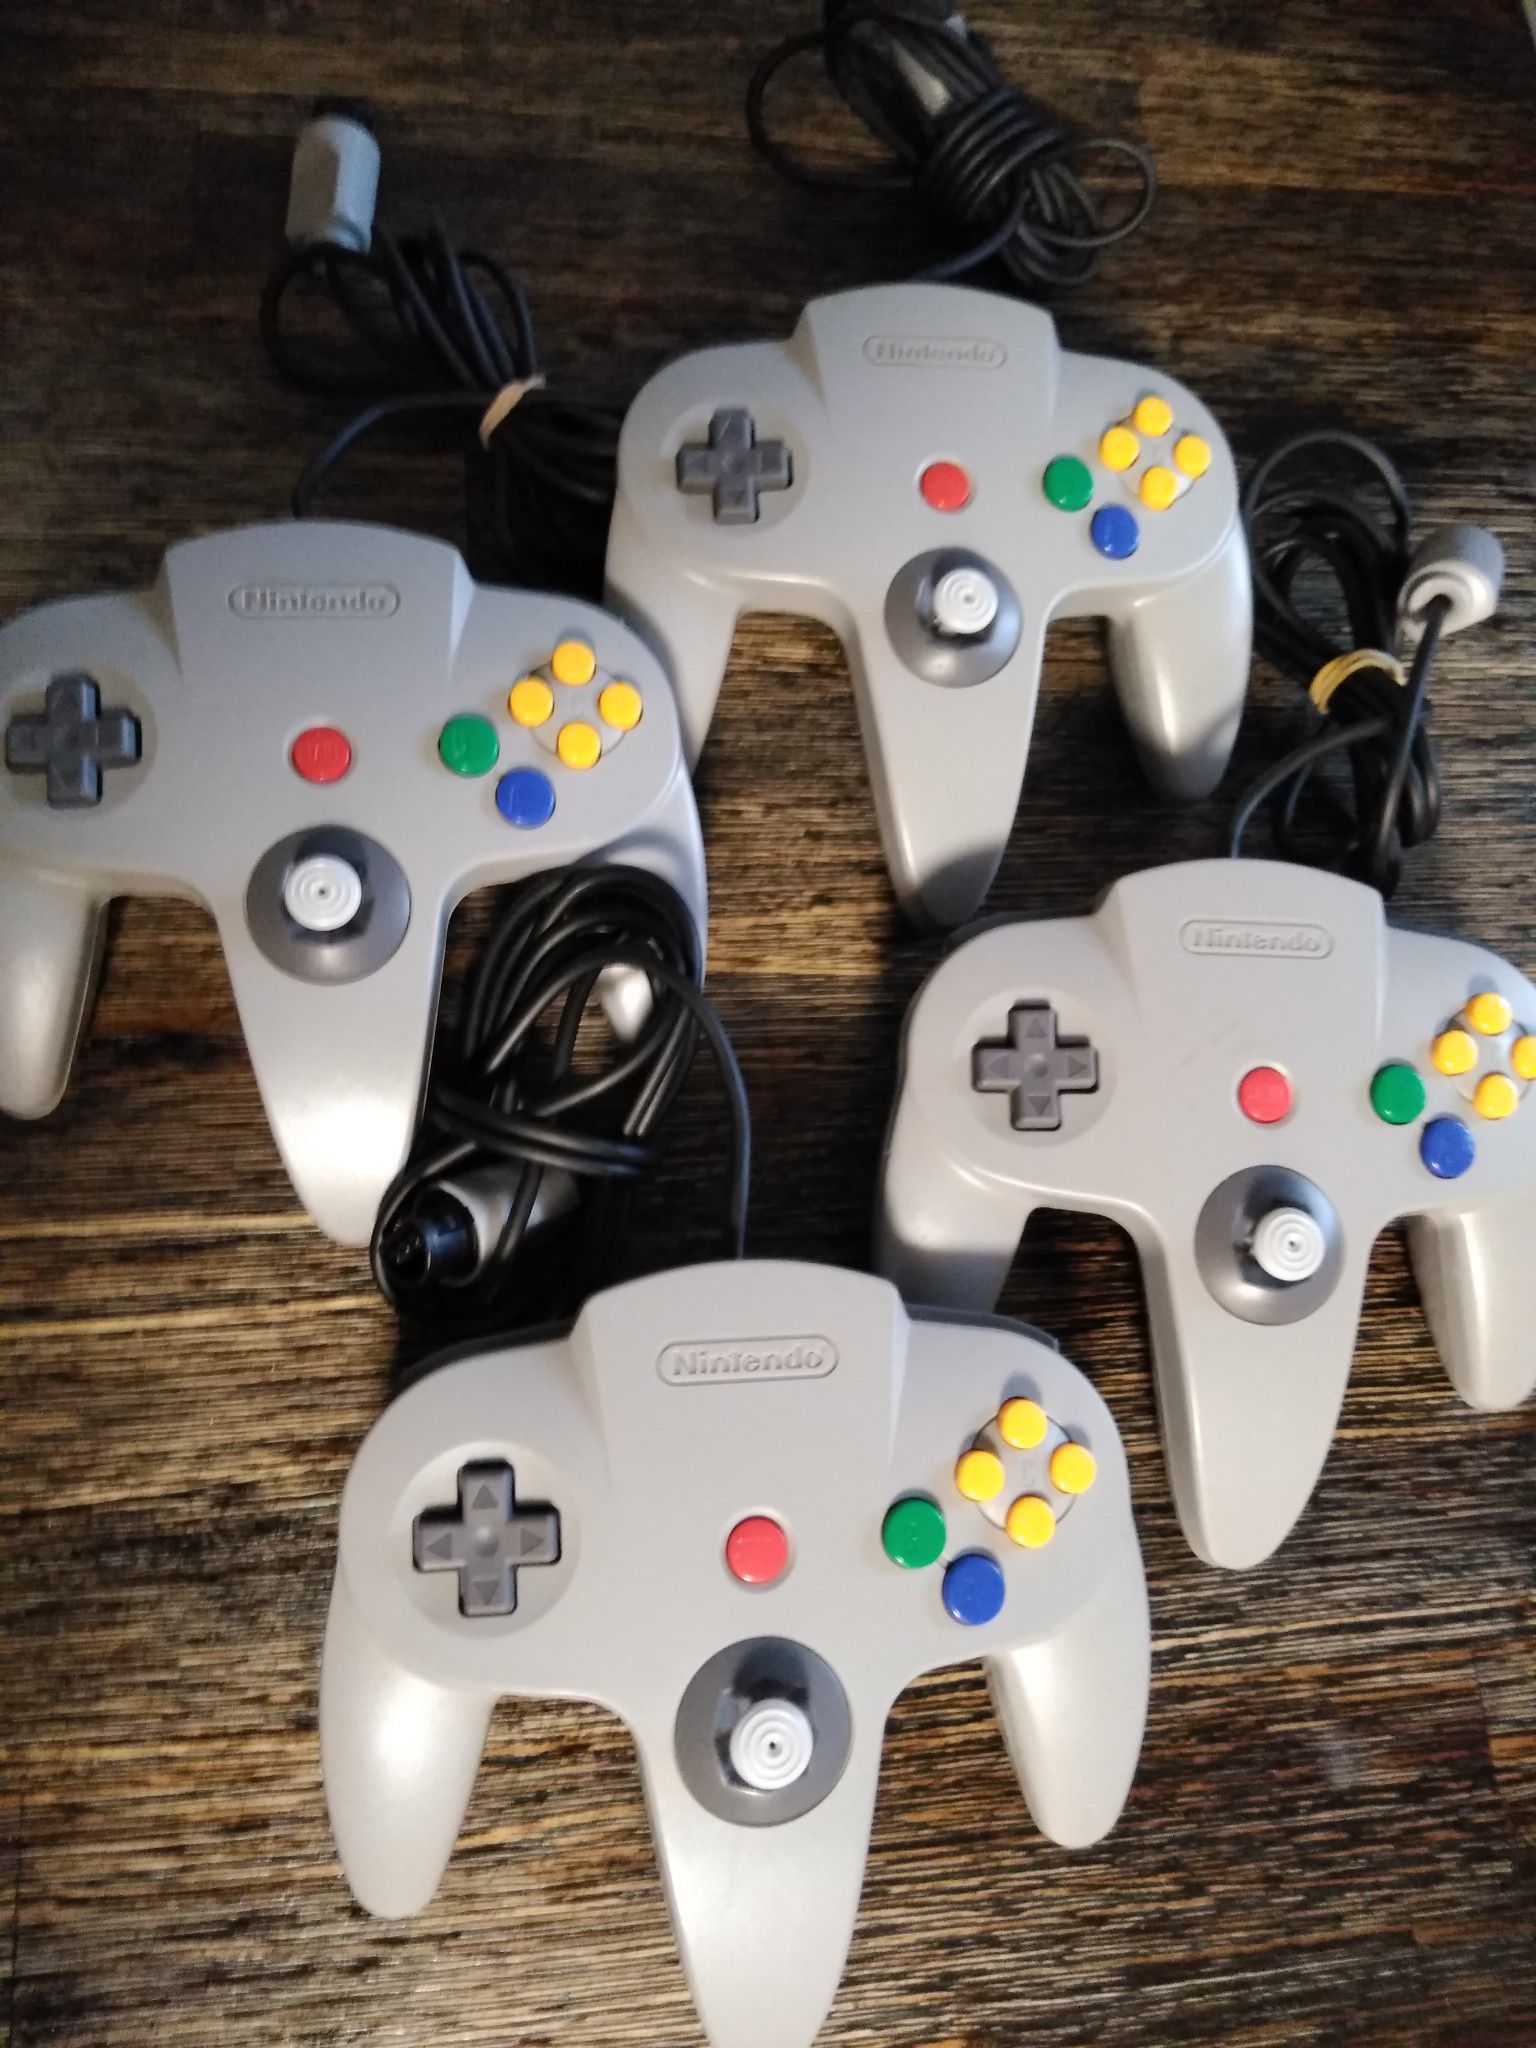 Nintendo 64 controllers